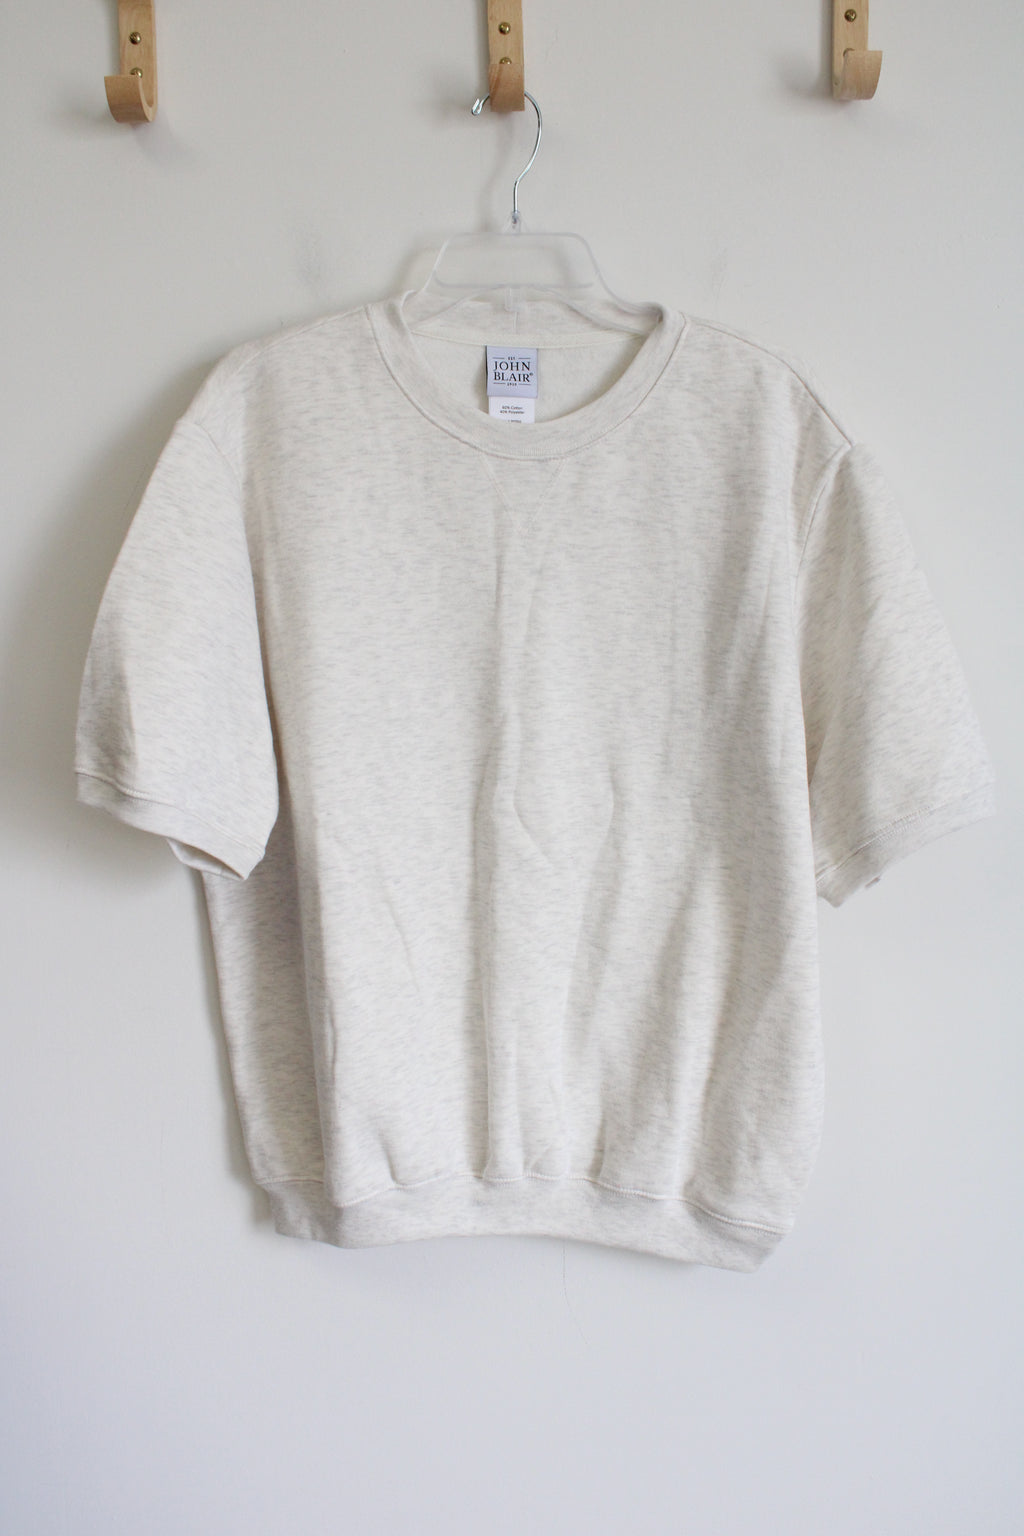 John Blair Cream Fleece Lined Short Sleeved Sweatshirt | L